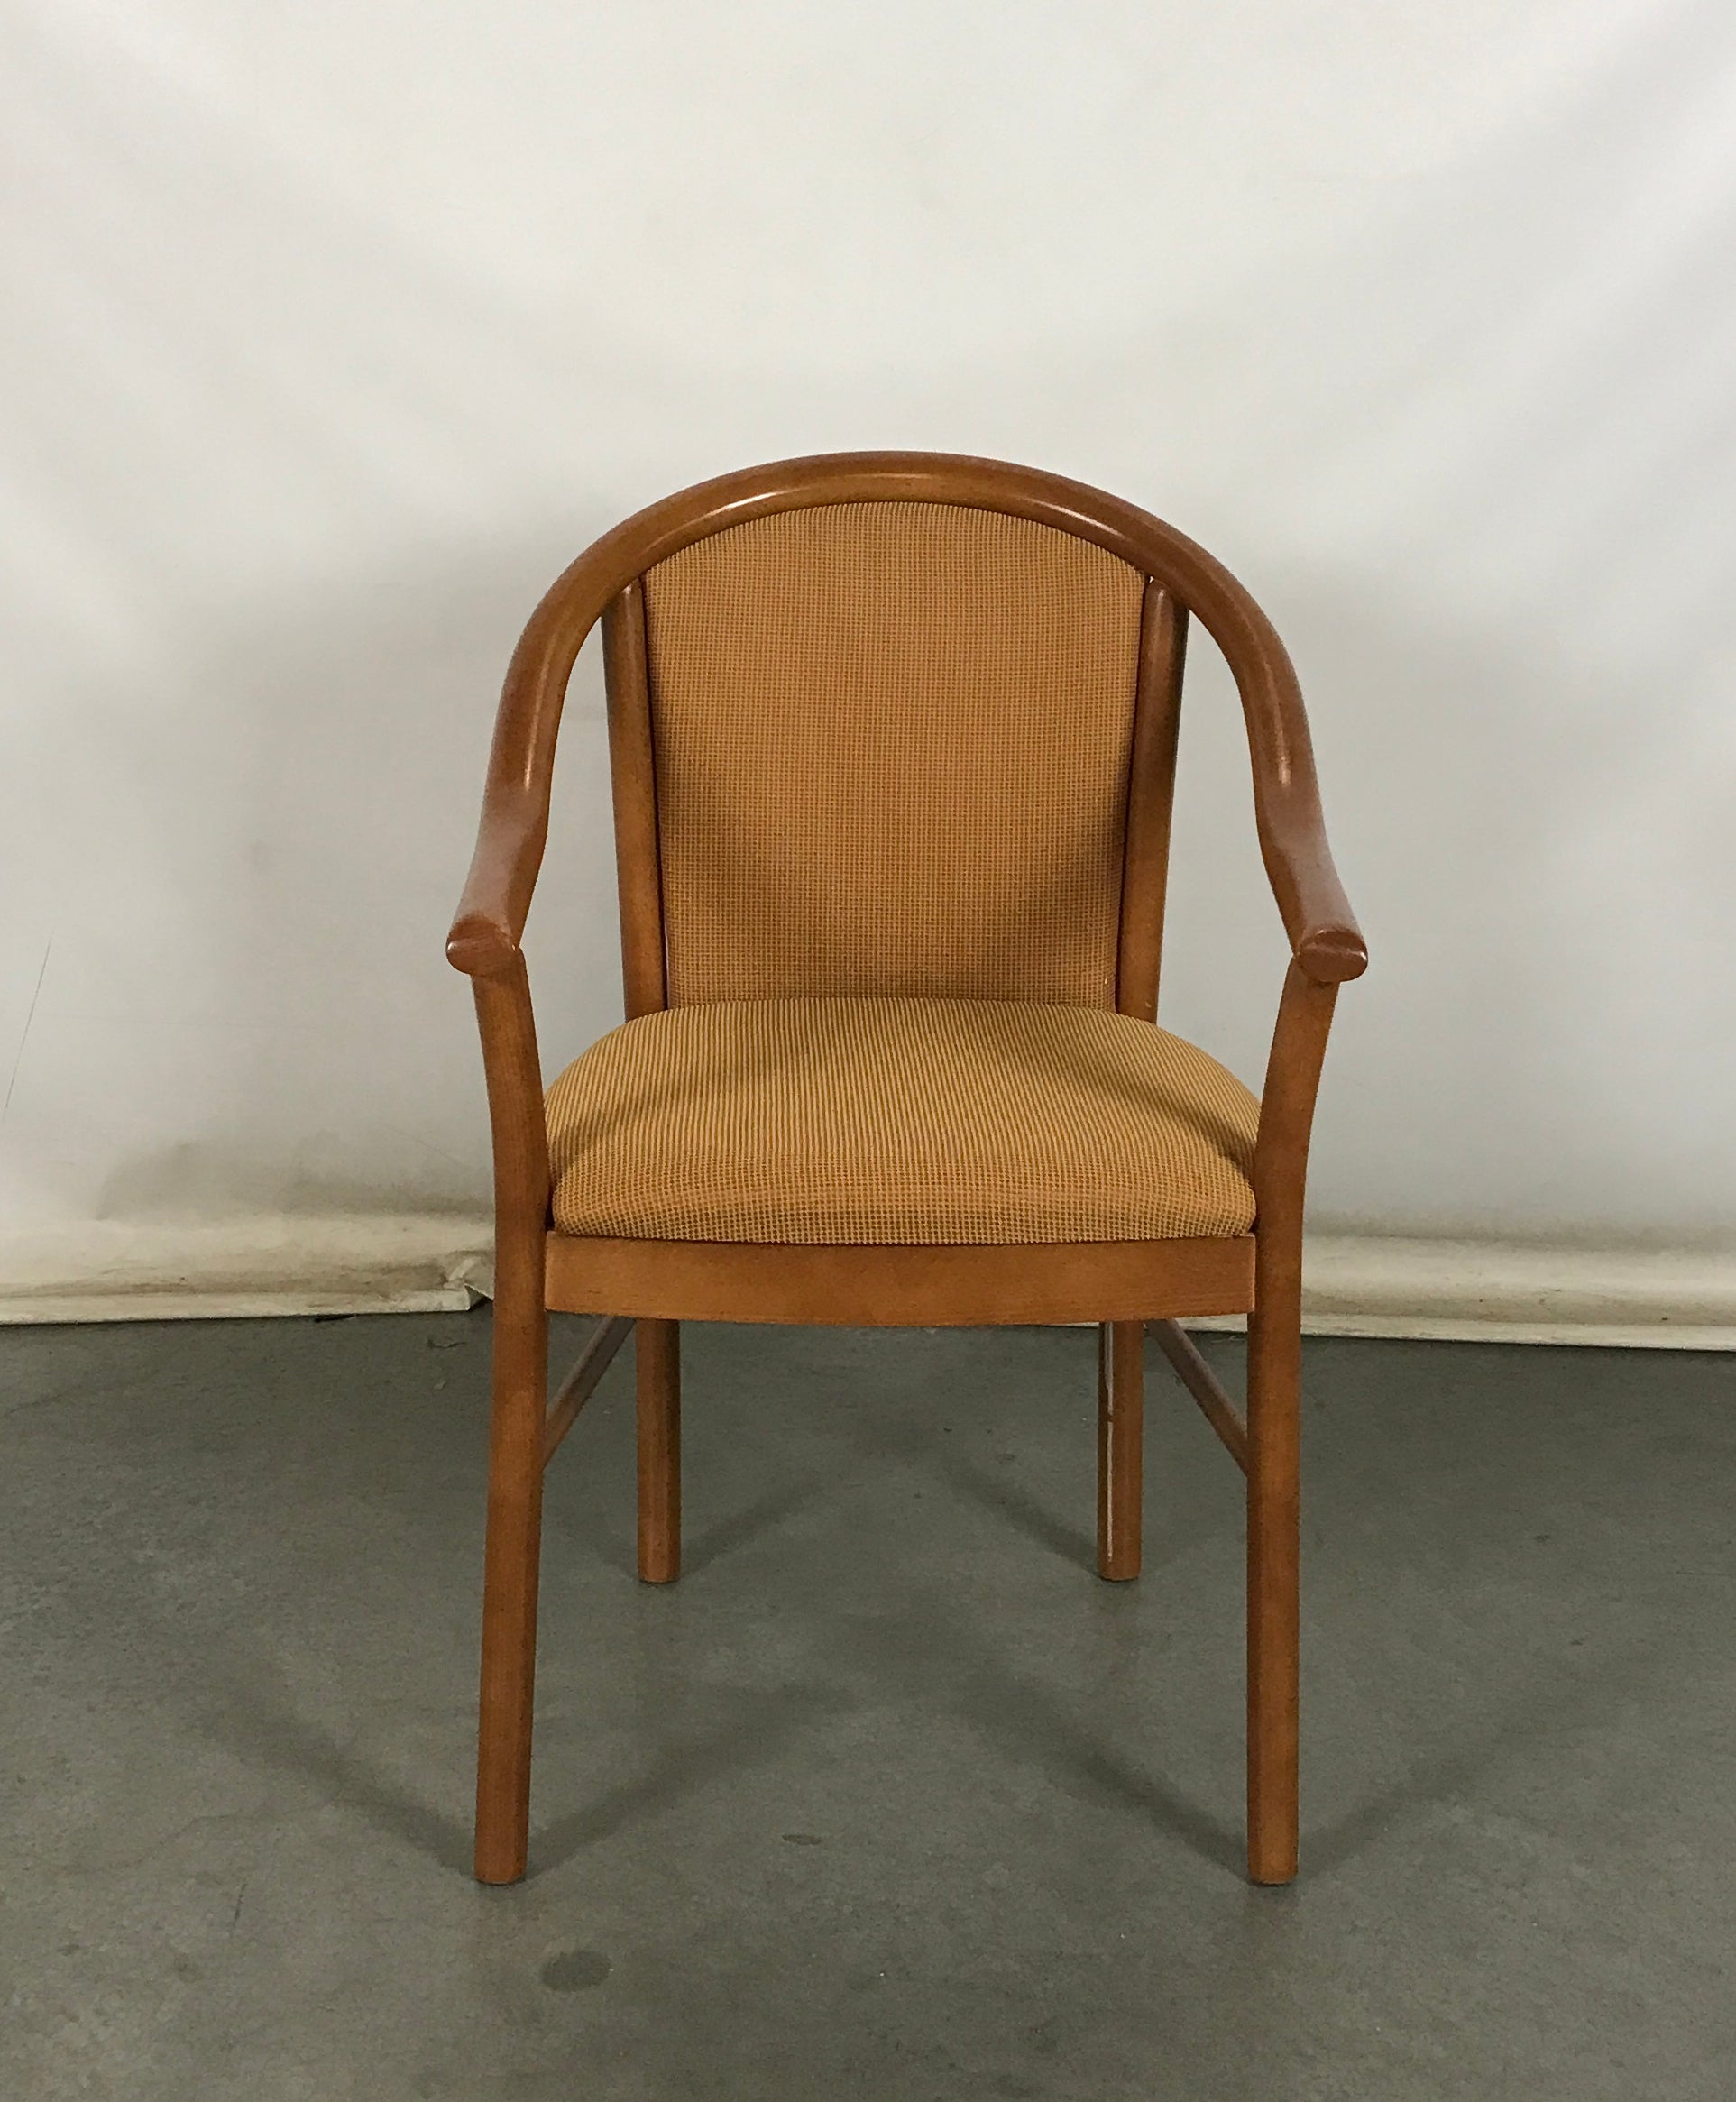 Steelcase Wooden Chair